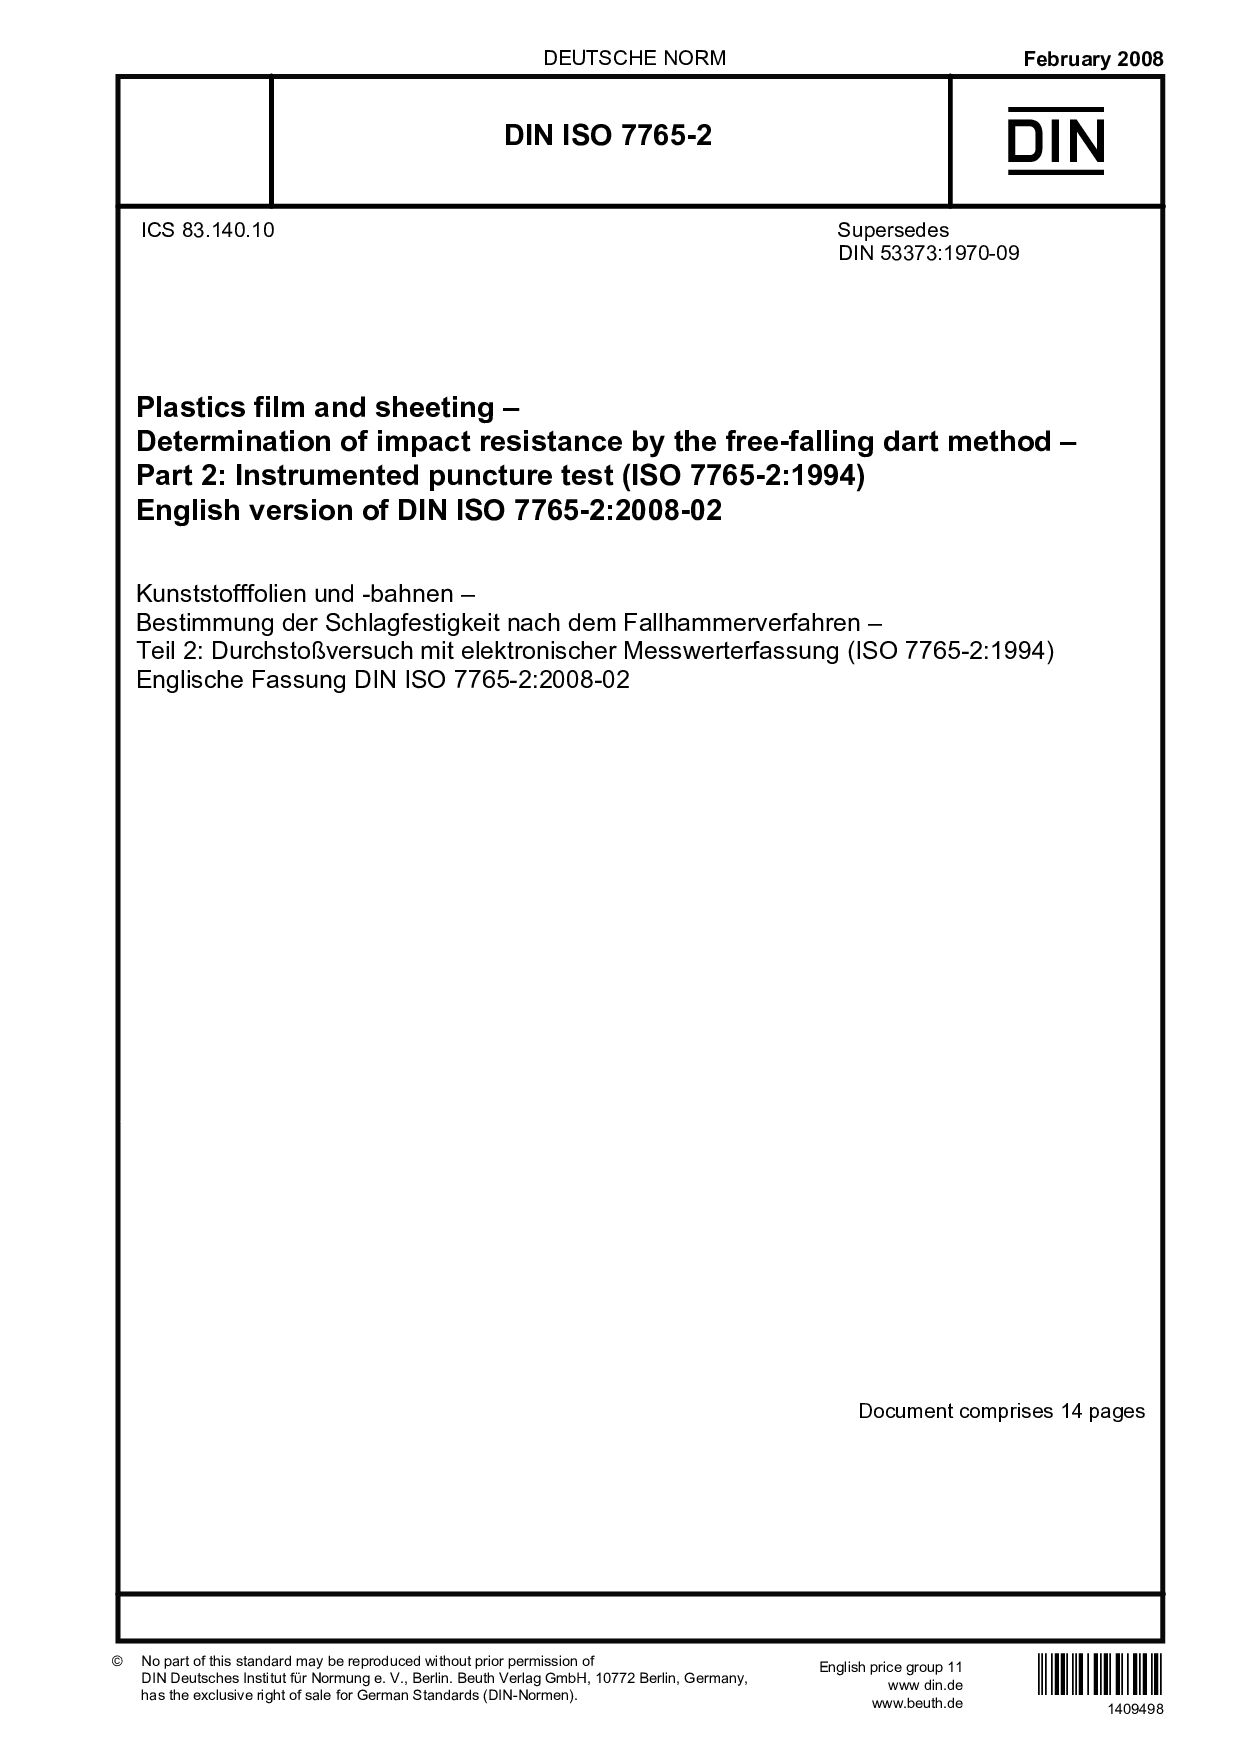 DIN ISO 7765-2:2008